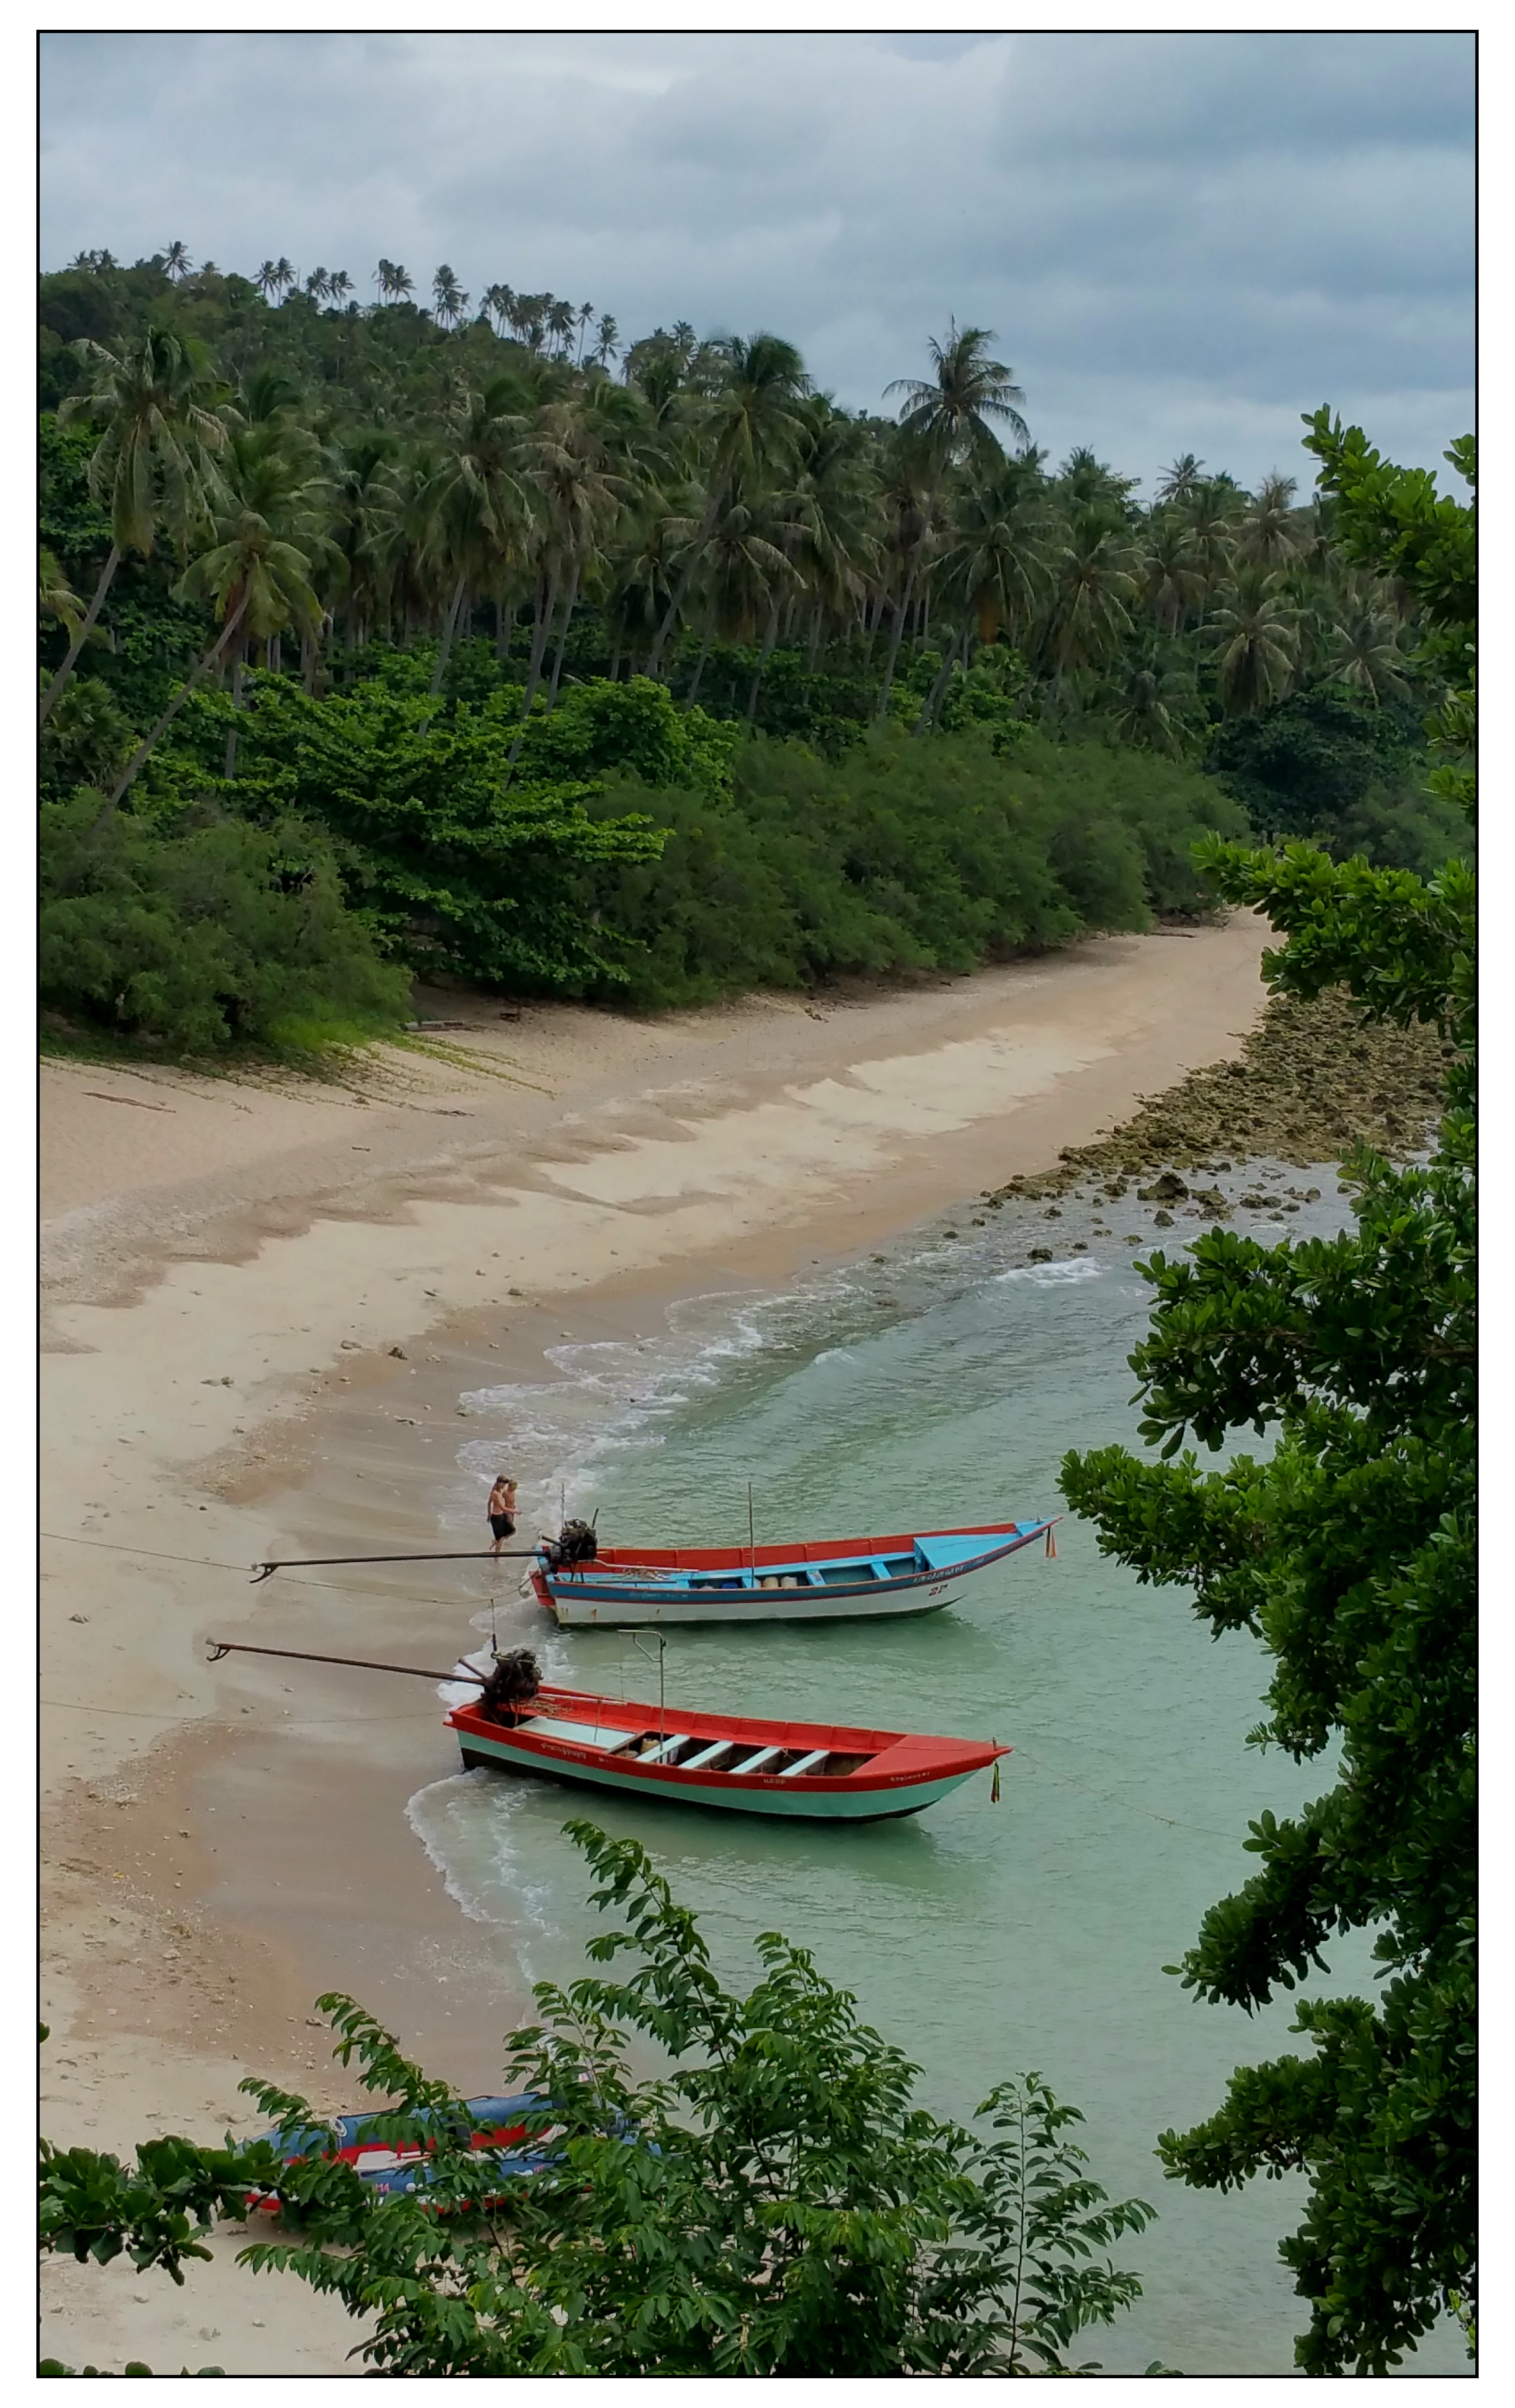 Koh phanghan beach boats 1.jpg